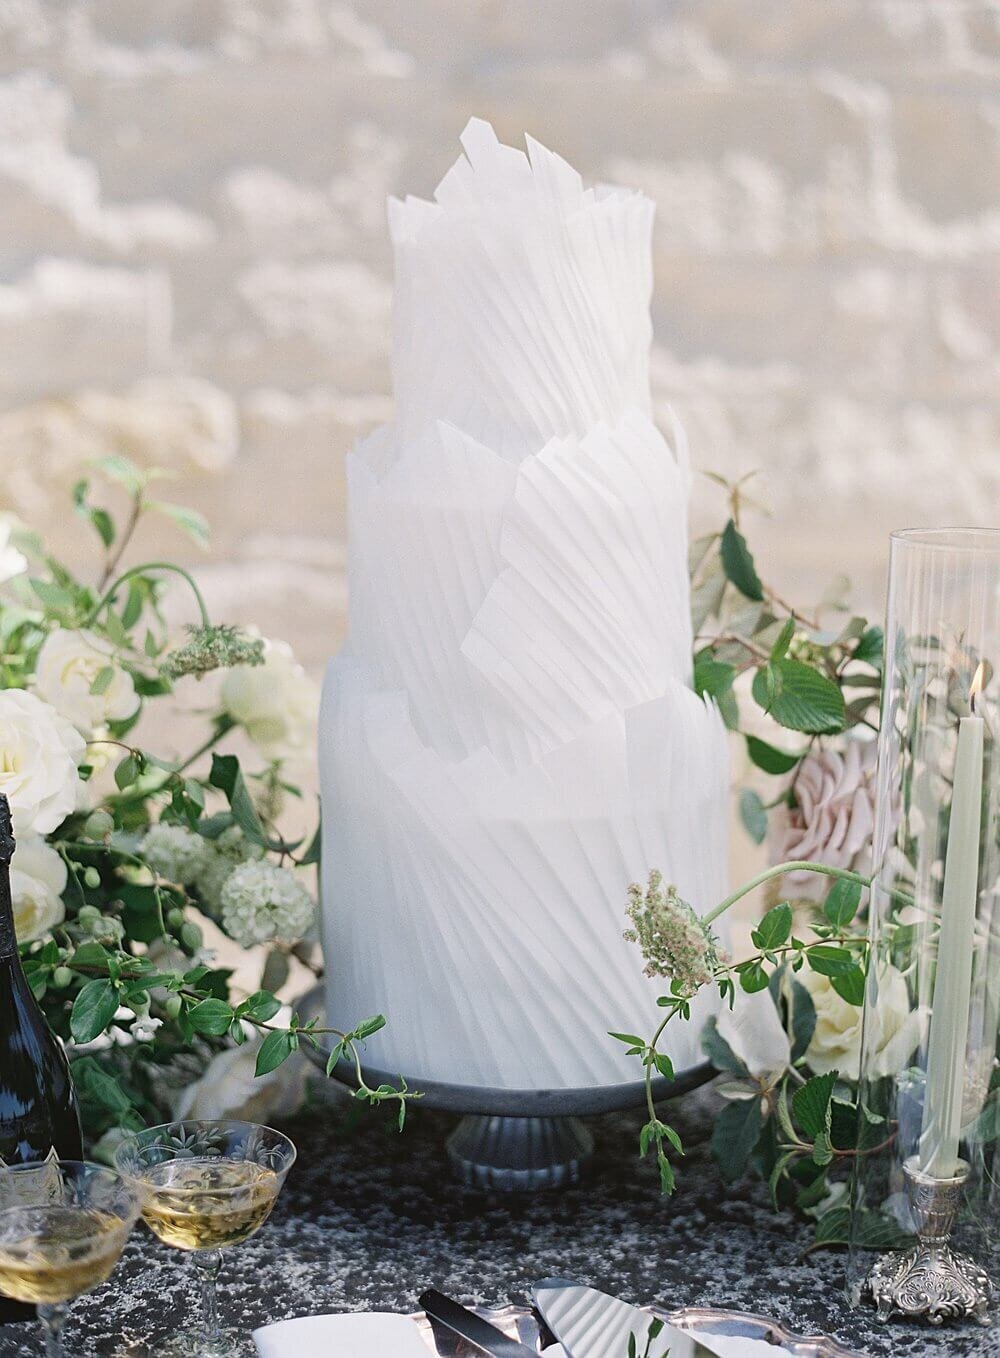 sculptural white wedding cake at cal-a-vie wedding | Jacqueline Benét